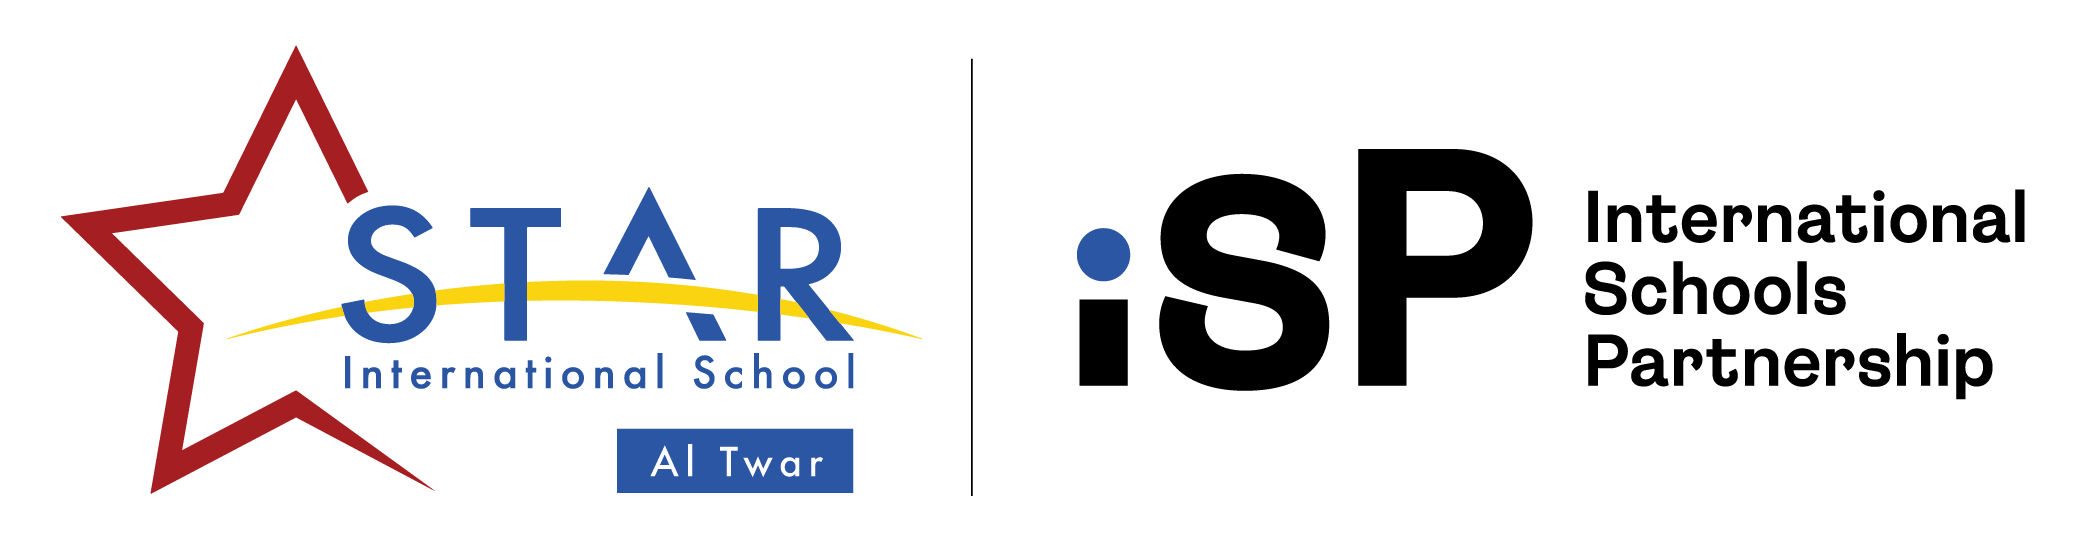 SIST-iSP Co-branding Logo-Color-3